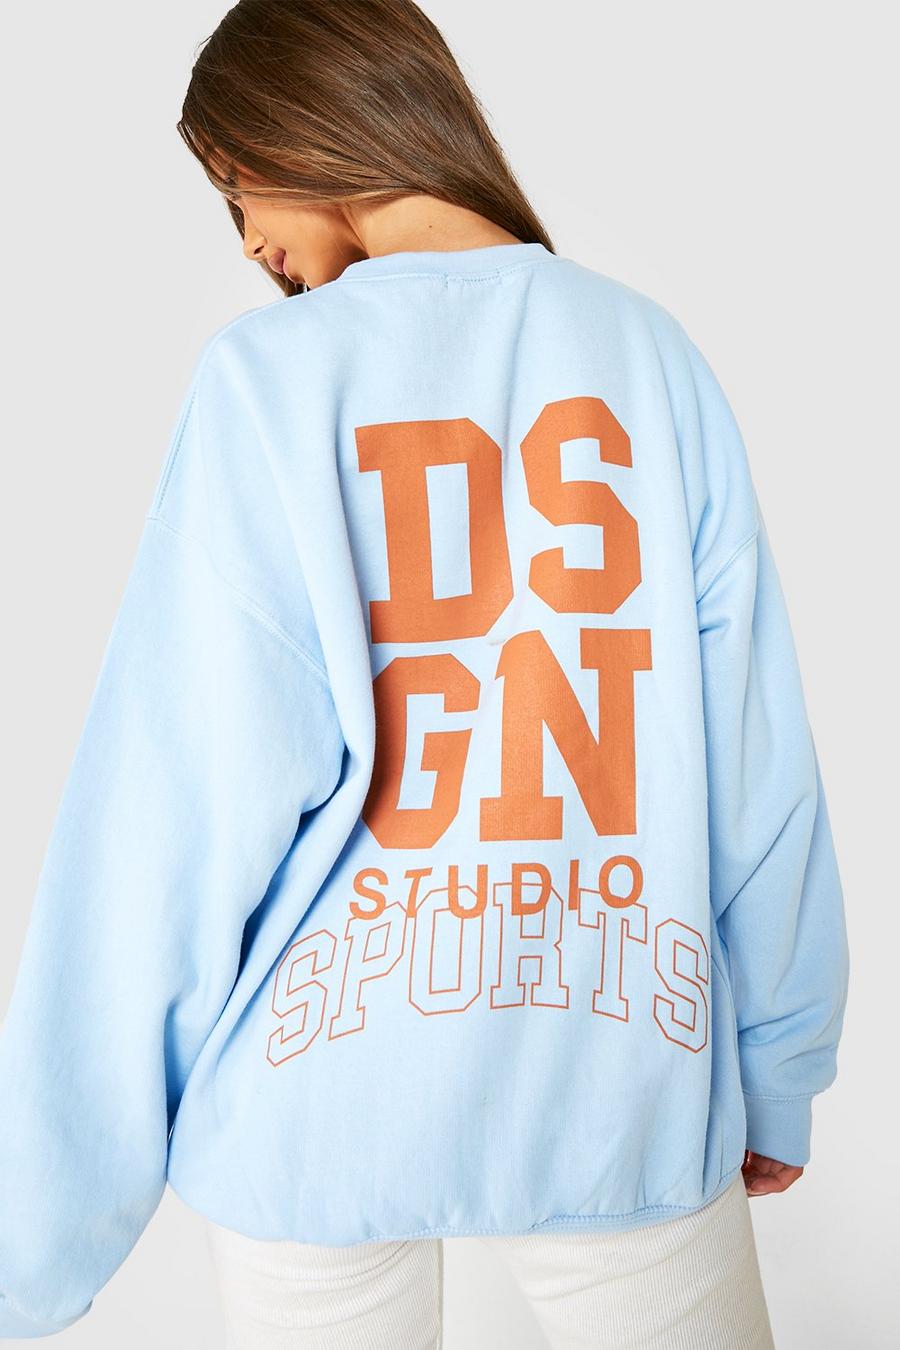 Dsgn Studio Sports Oversized Sweater